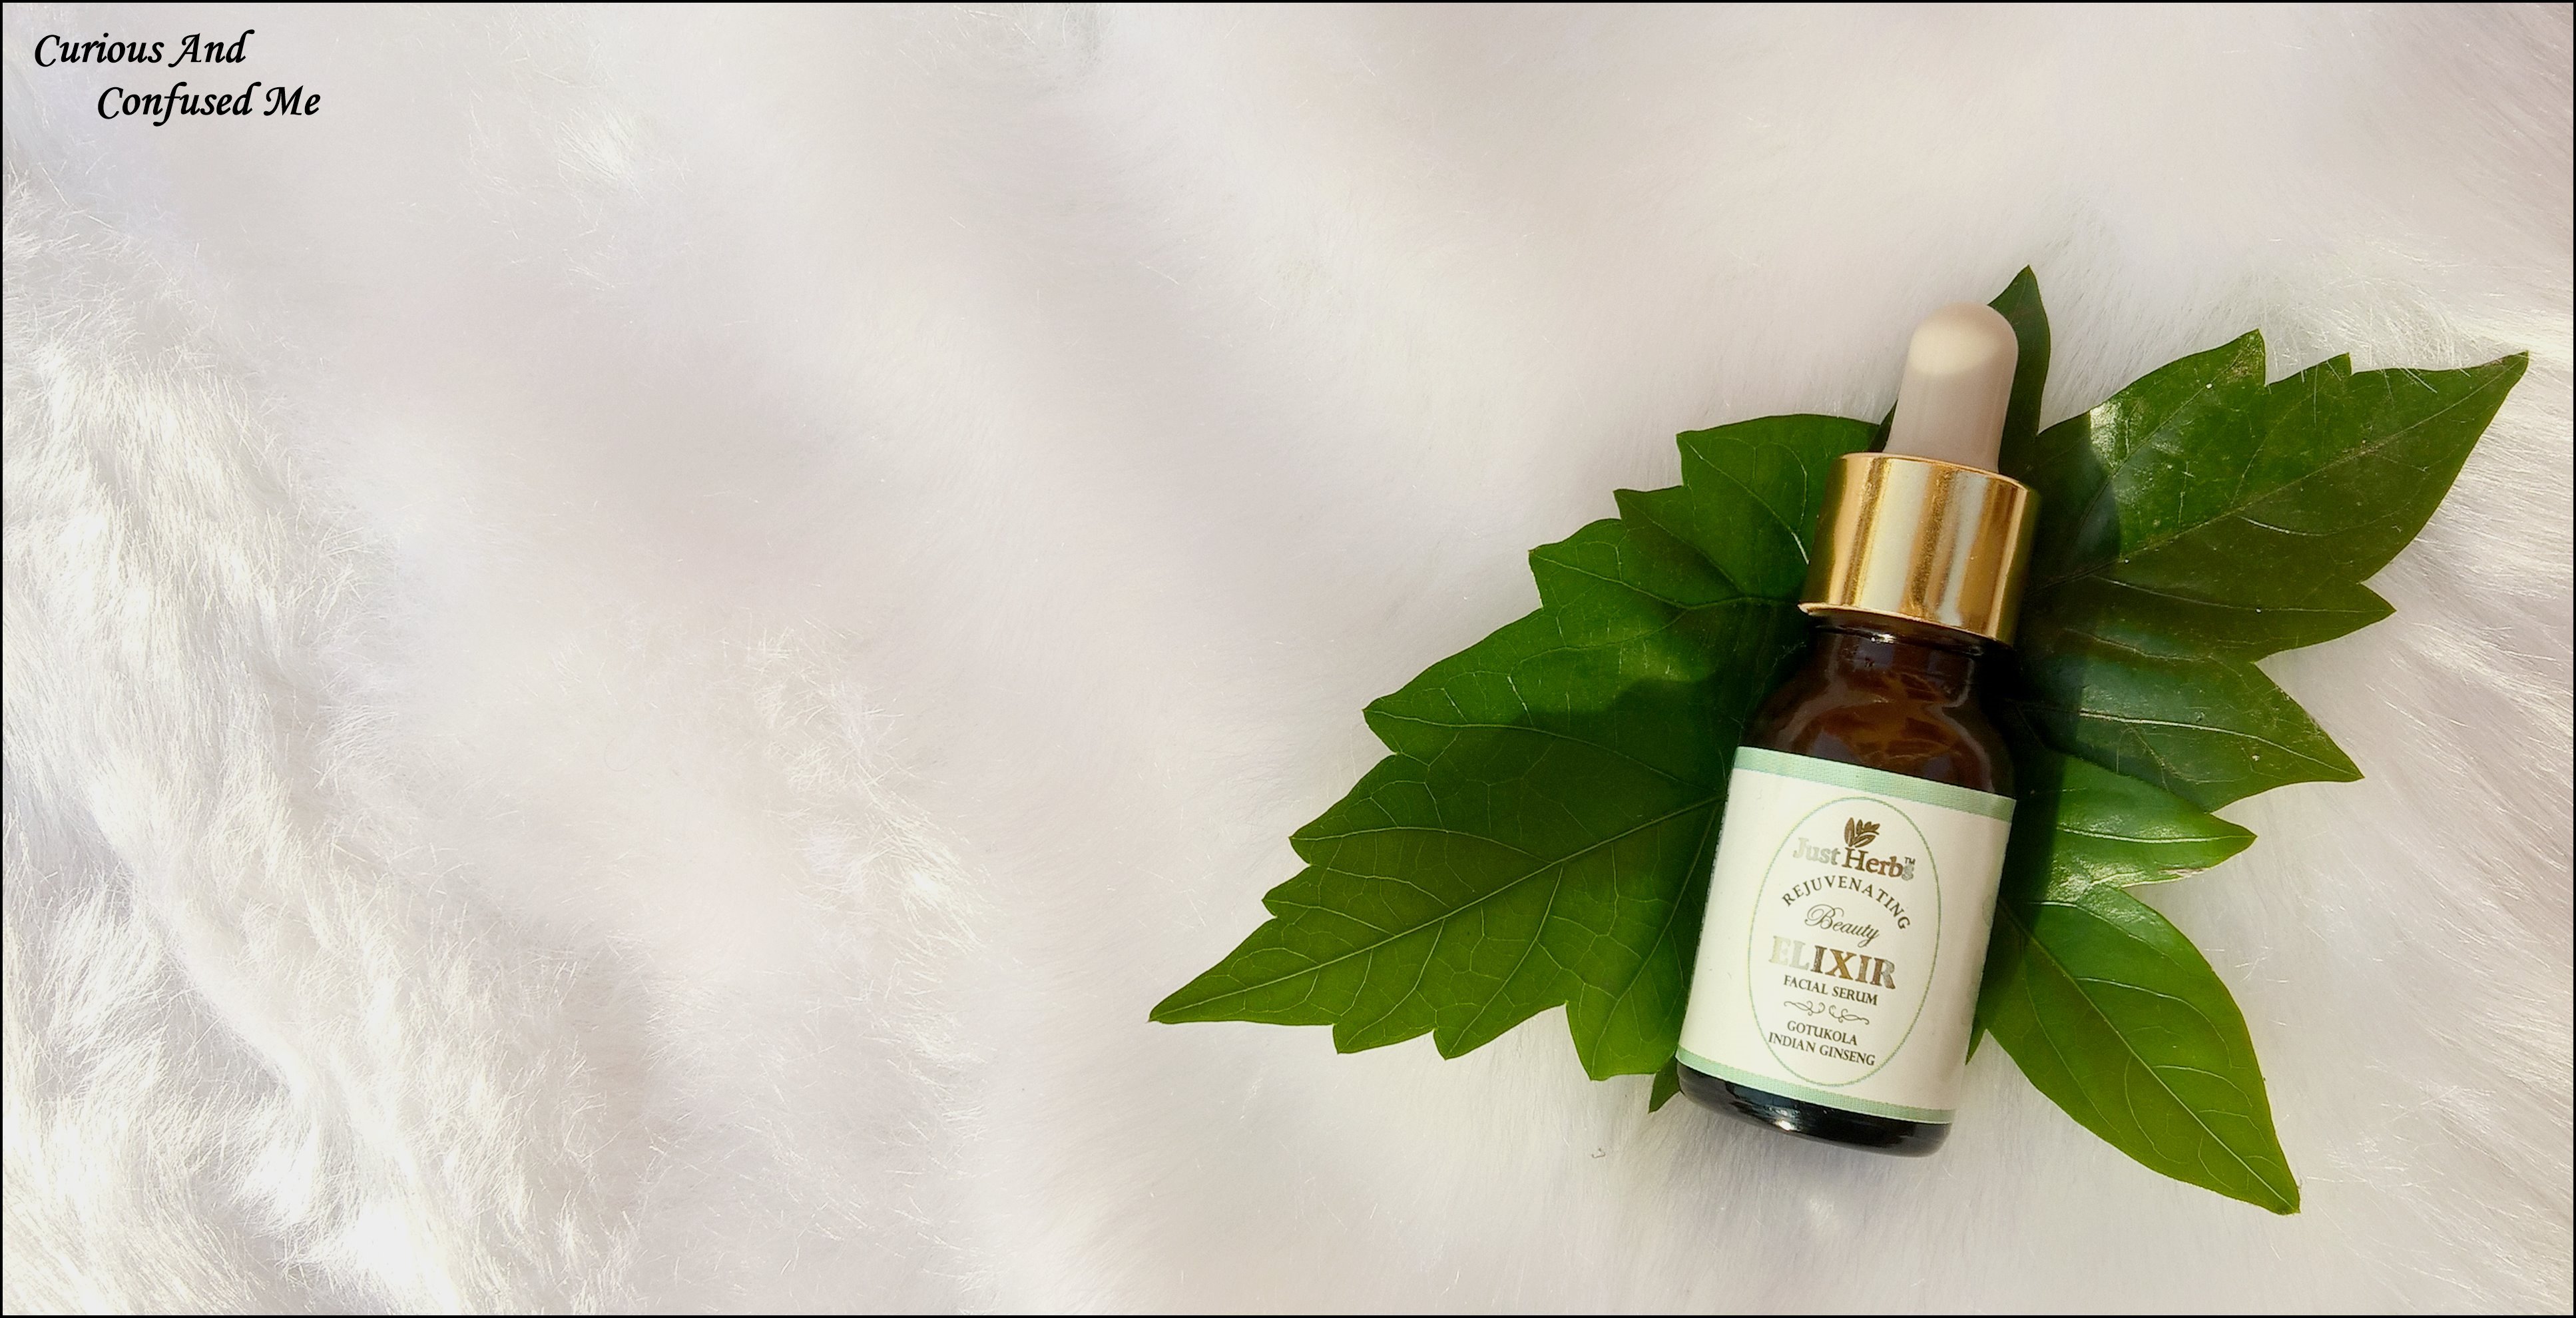 Just Herbs Rejuvenating Beauty Elixir Facial Serum : Review